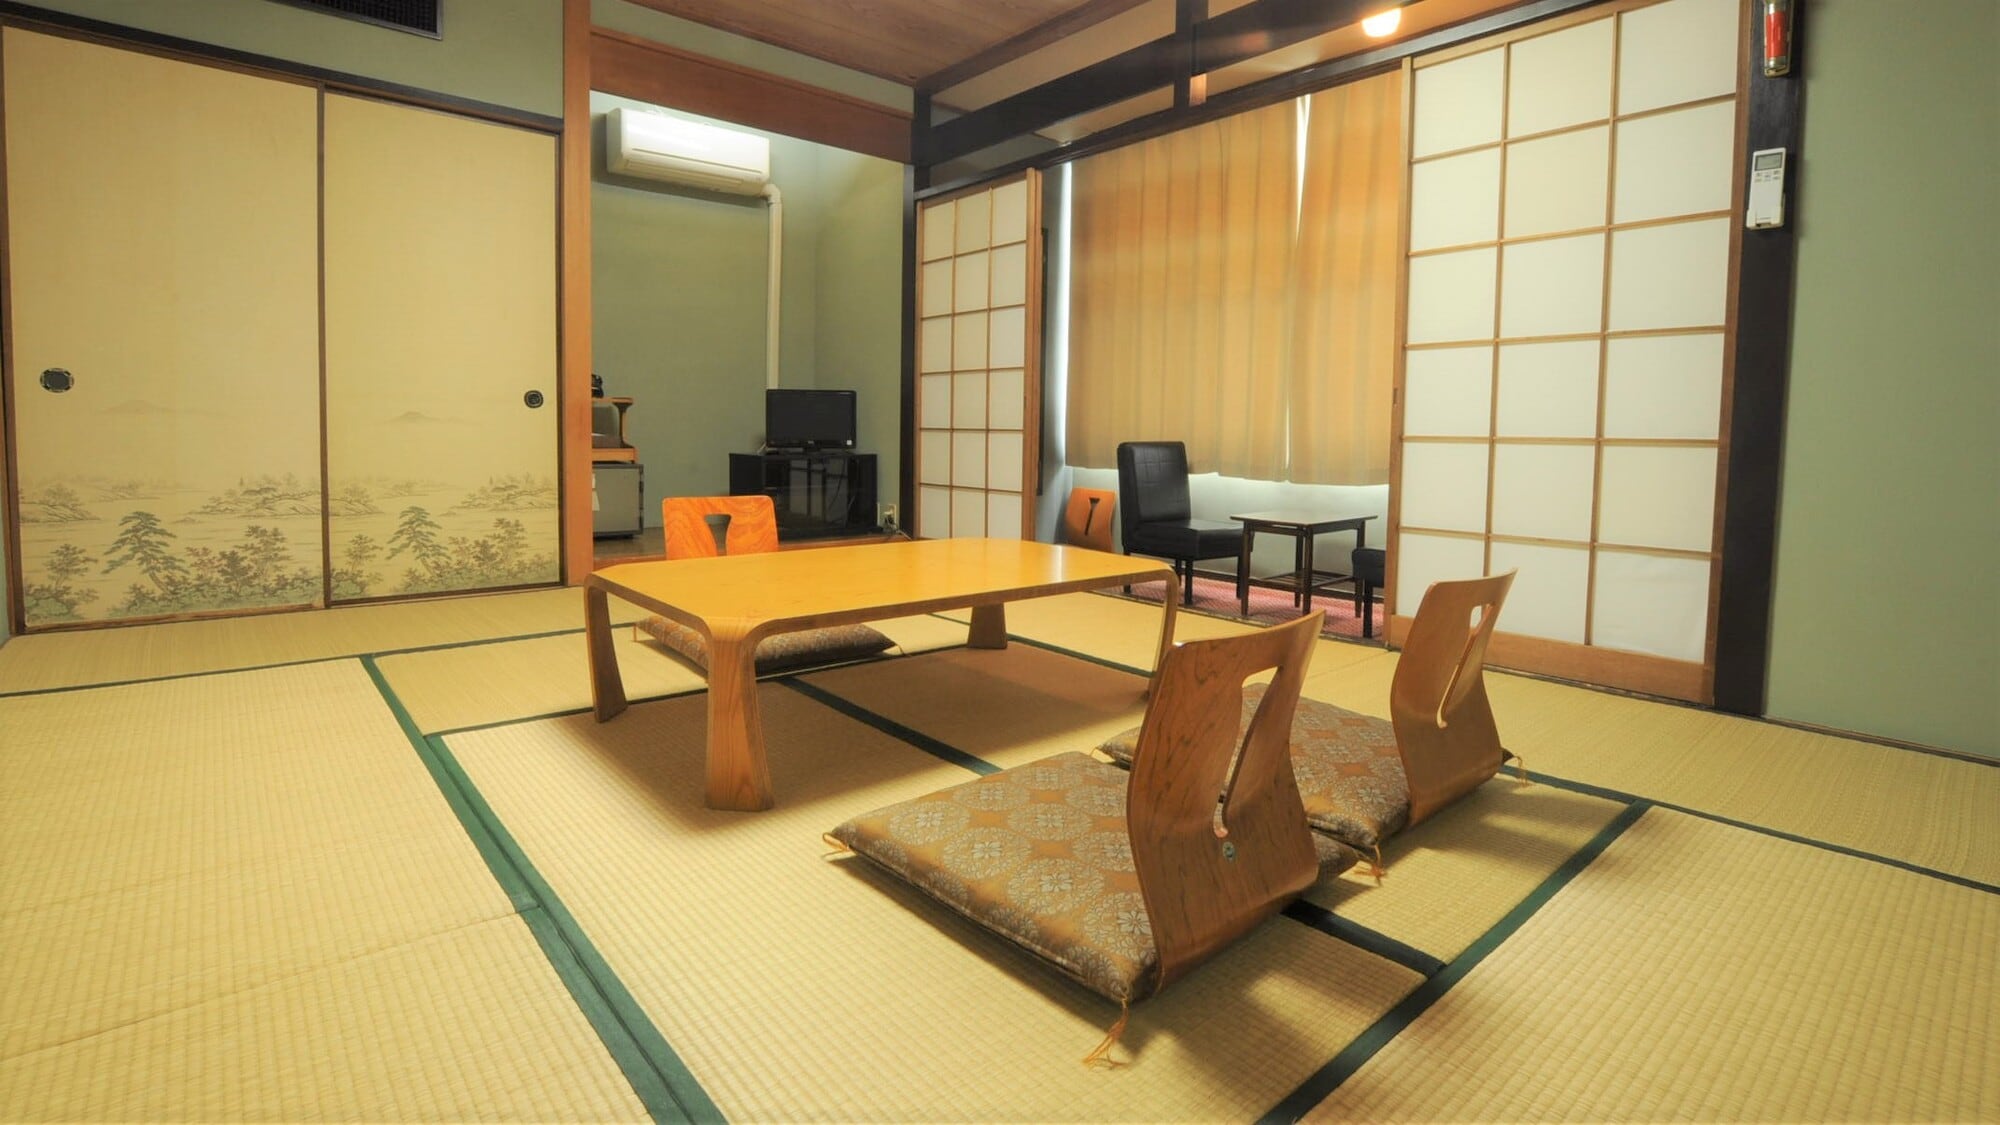 ◆ Japanese-style room 10 tatami mats